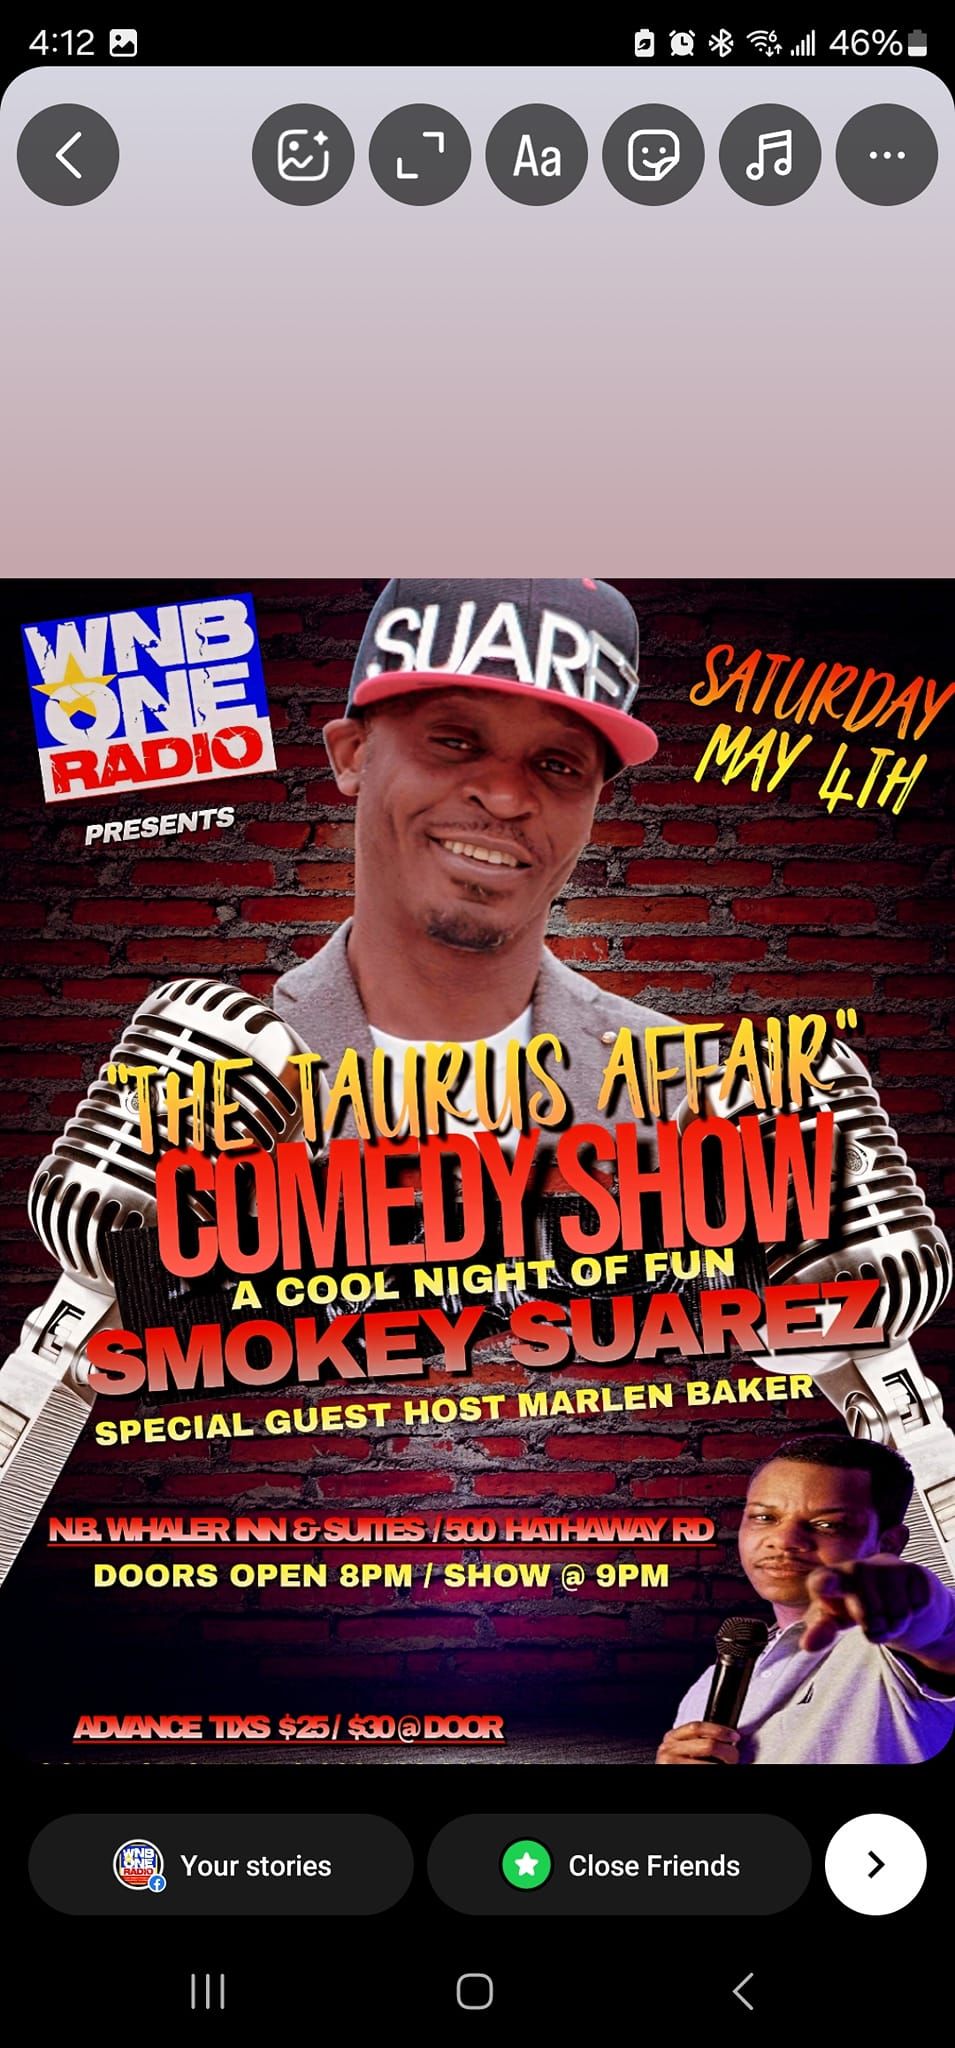 "The Taurus Affair'...Comedy Show !!! A Cool Nite out with Smokey Suarez.